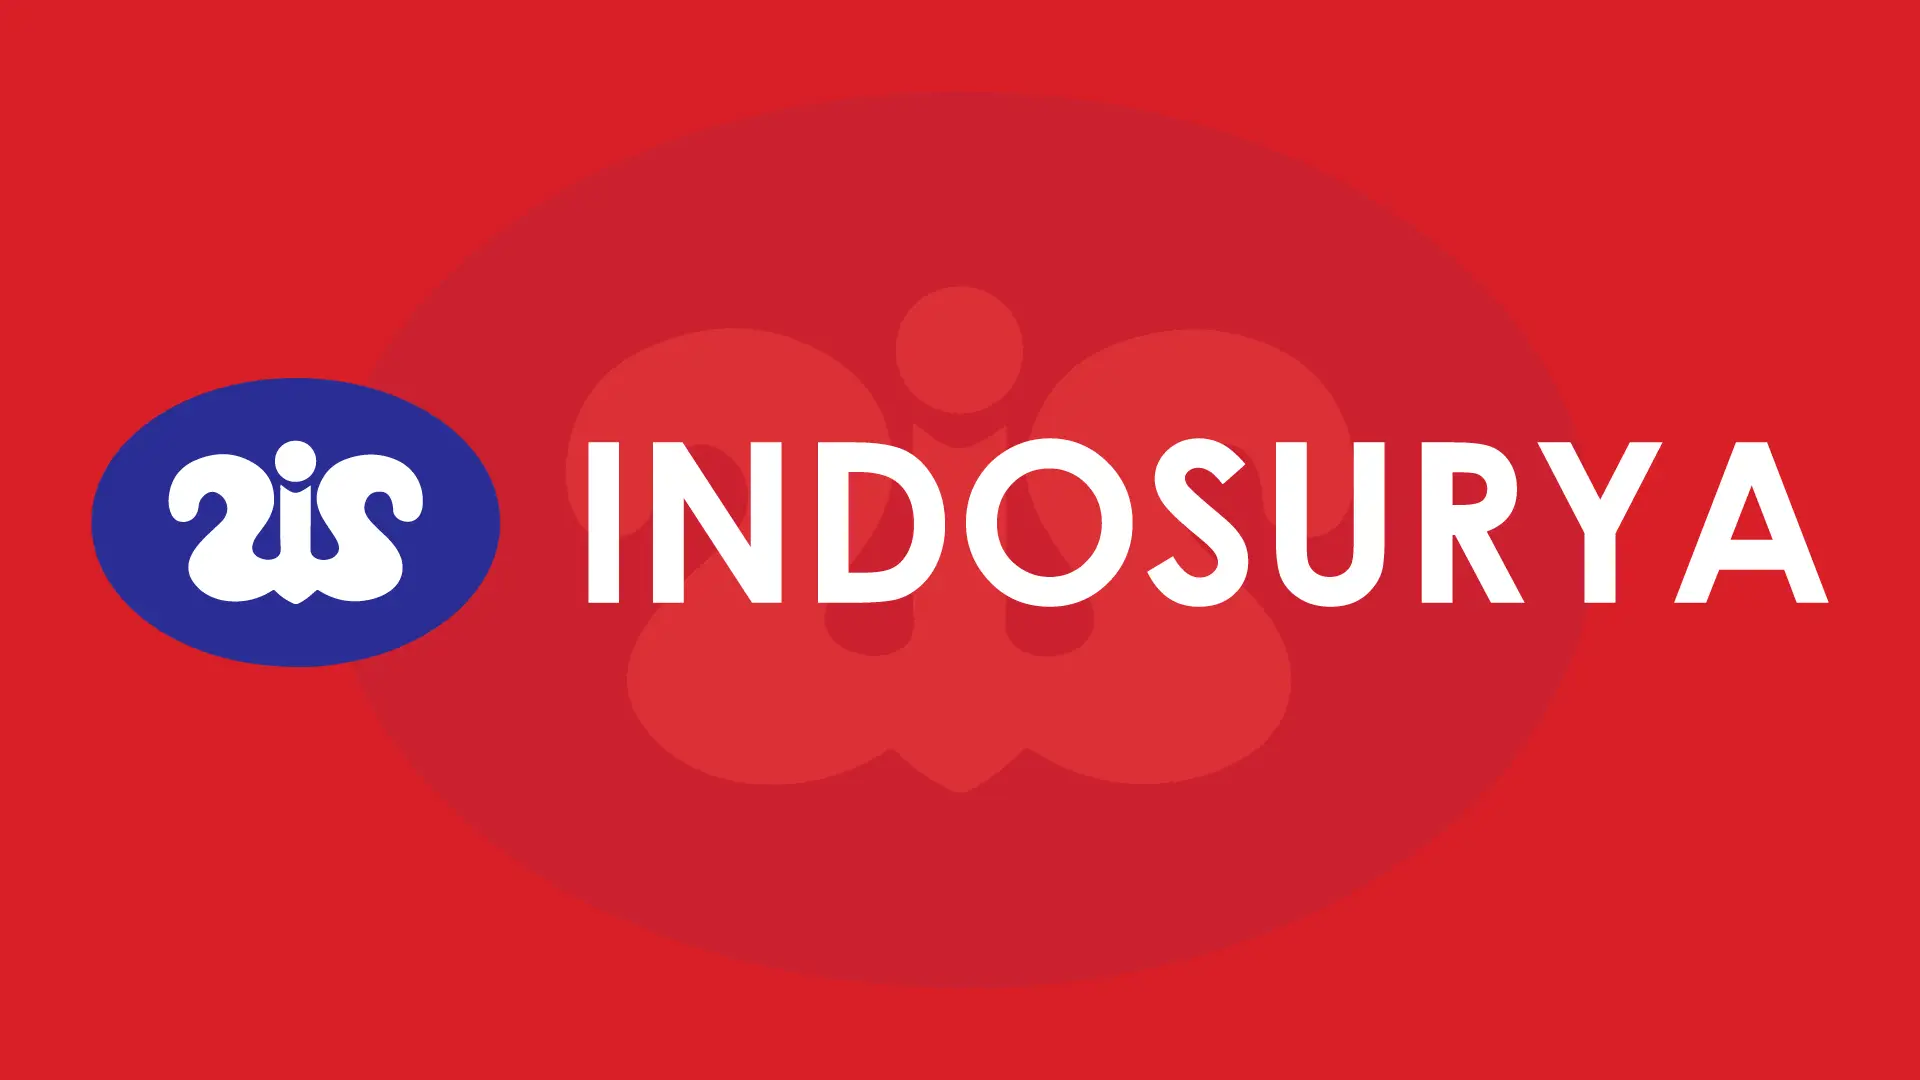 Indosurya Finance Gets 50 Million Euros to Support SMEs